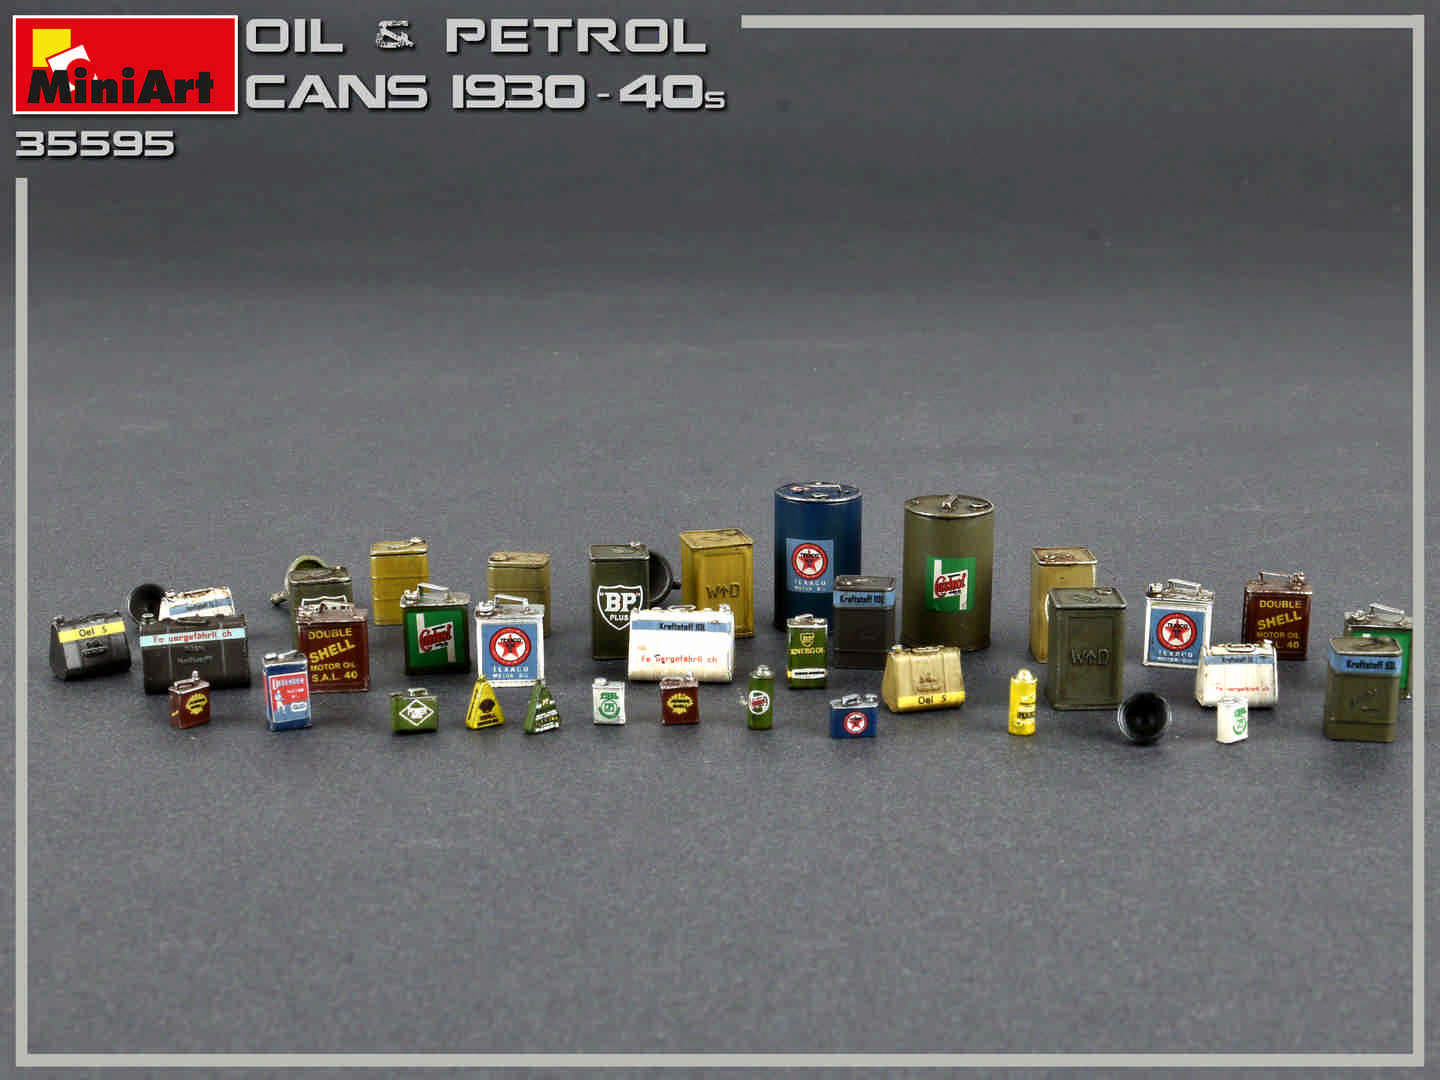 MINIART 35595 Oil & Petrol CANS 1930-40s WW II 1/35 Scale Plastic Model kit 